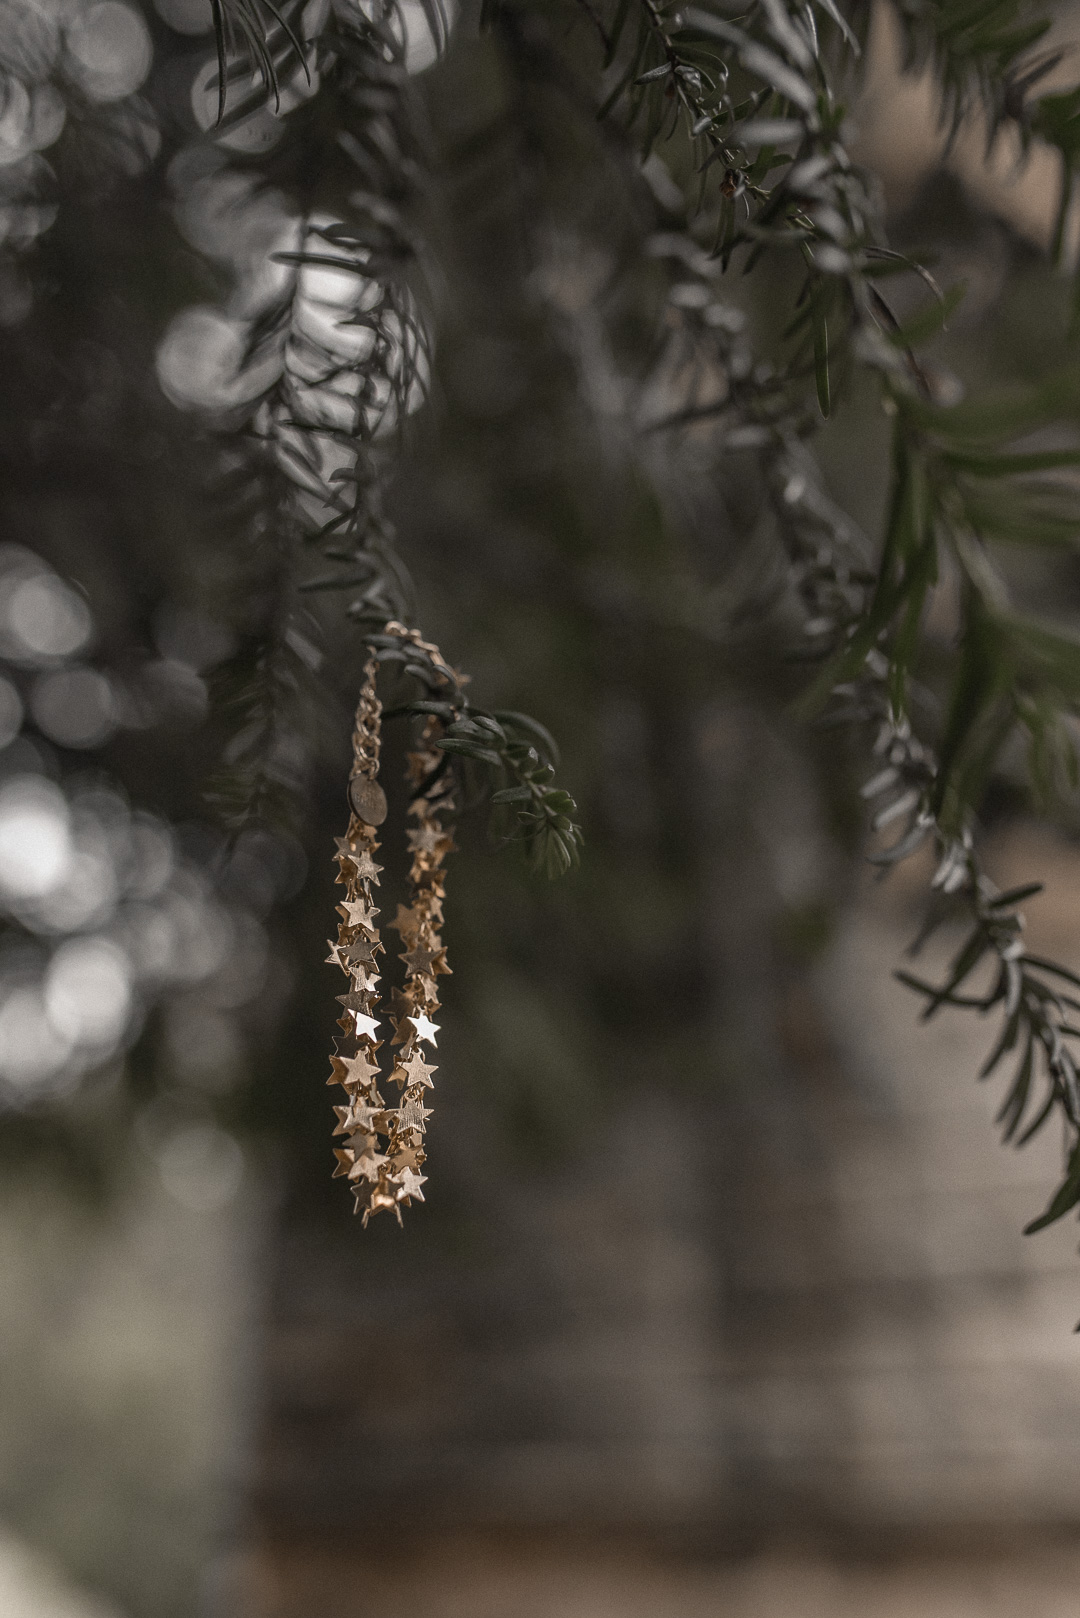 Boho Betty - Star bracelet hanging from a tree